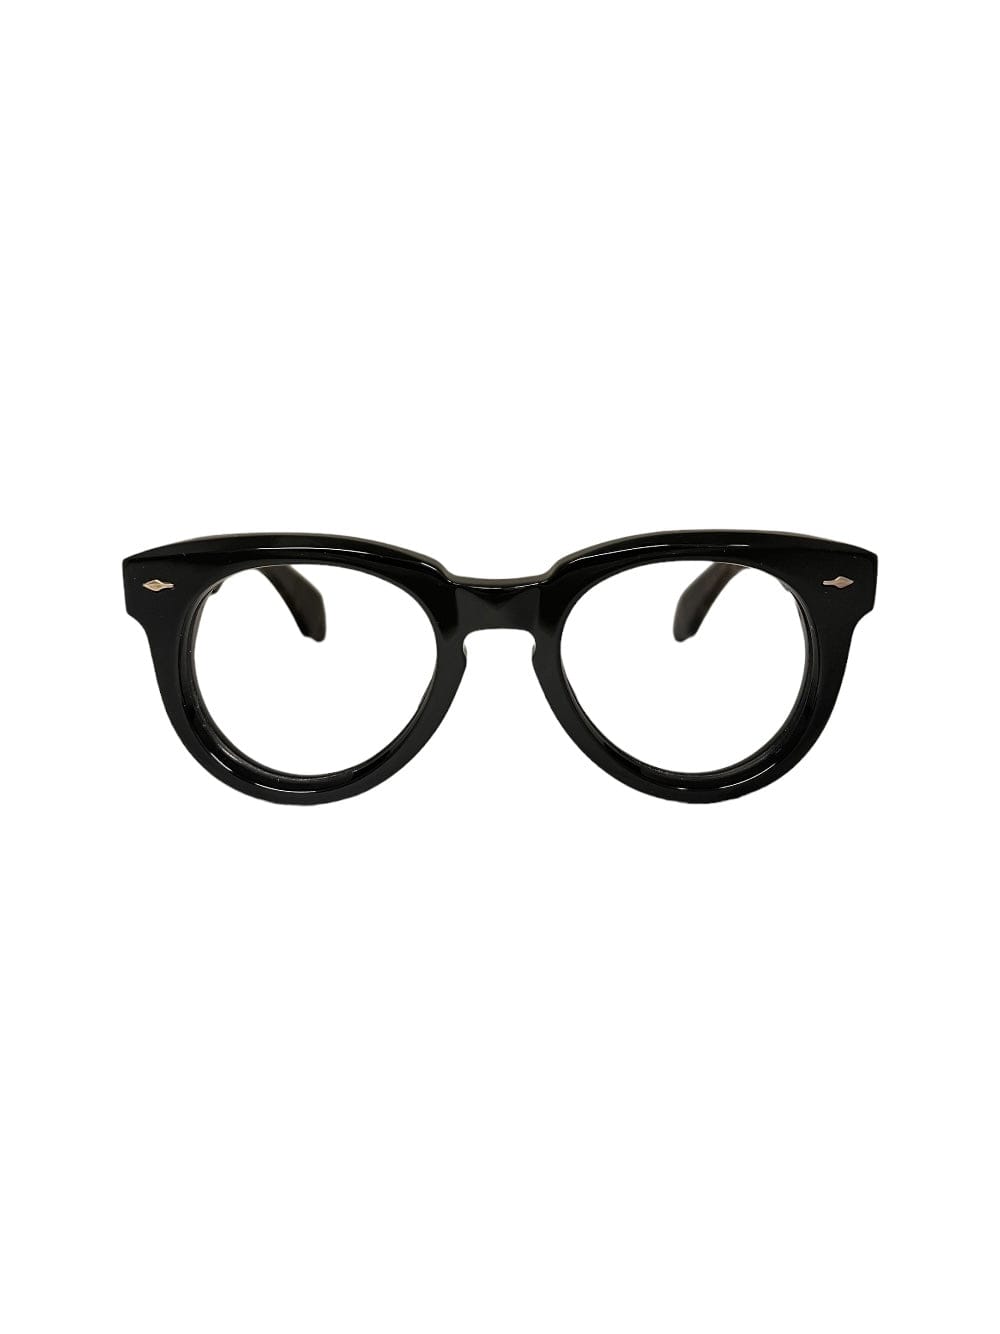 Jacques Marie Mage Fontainebleau - Noire 7 Rx Glasses In Black